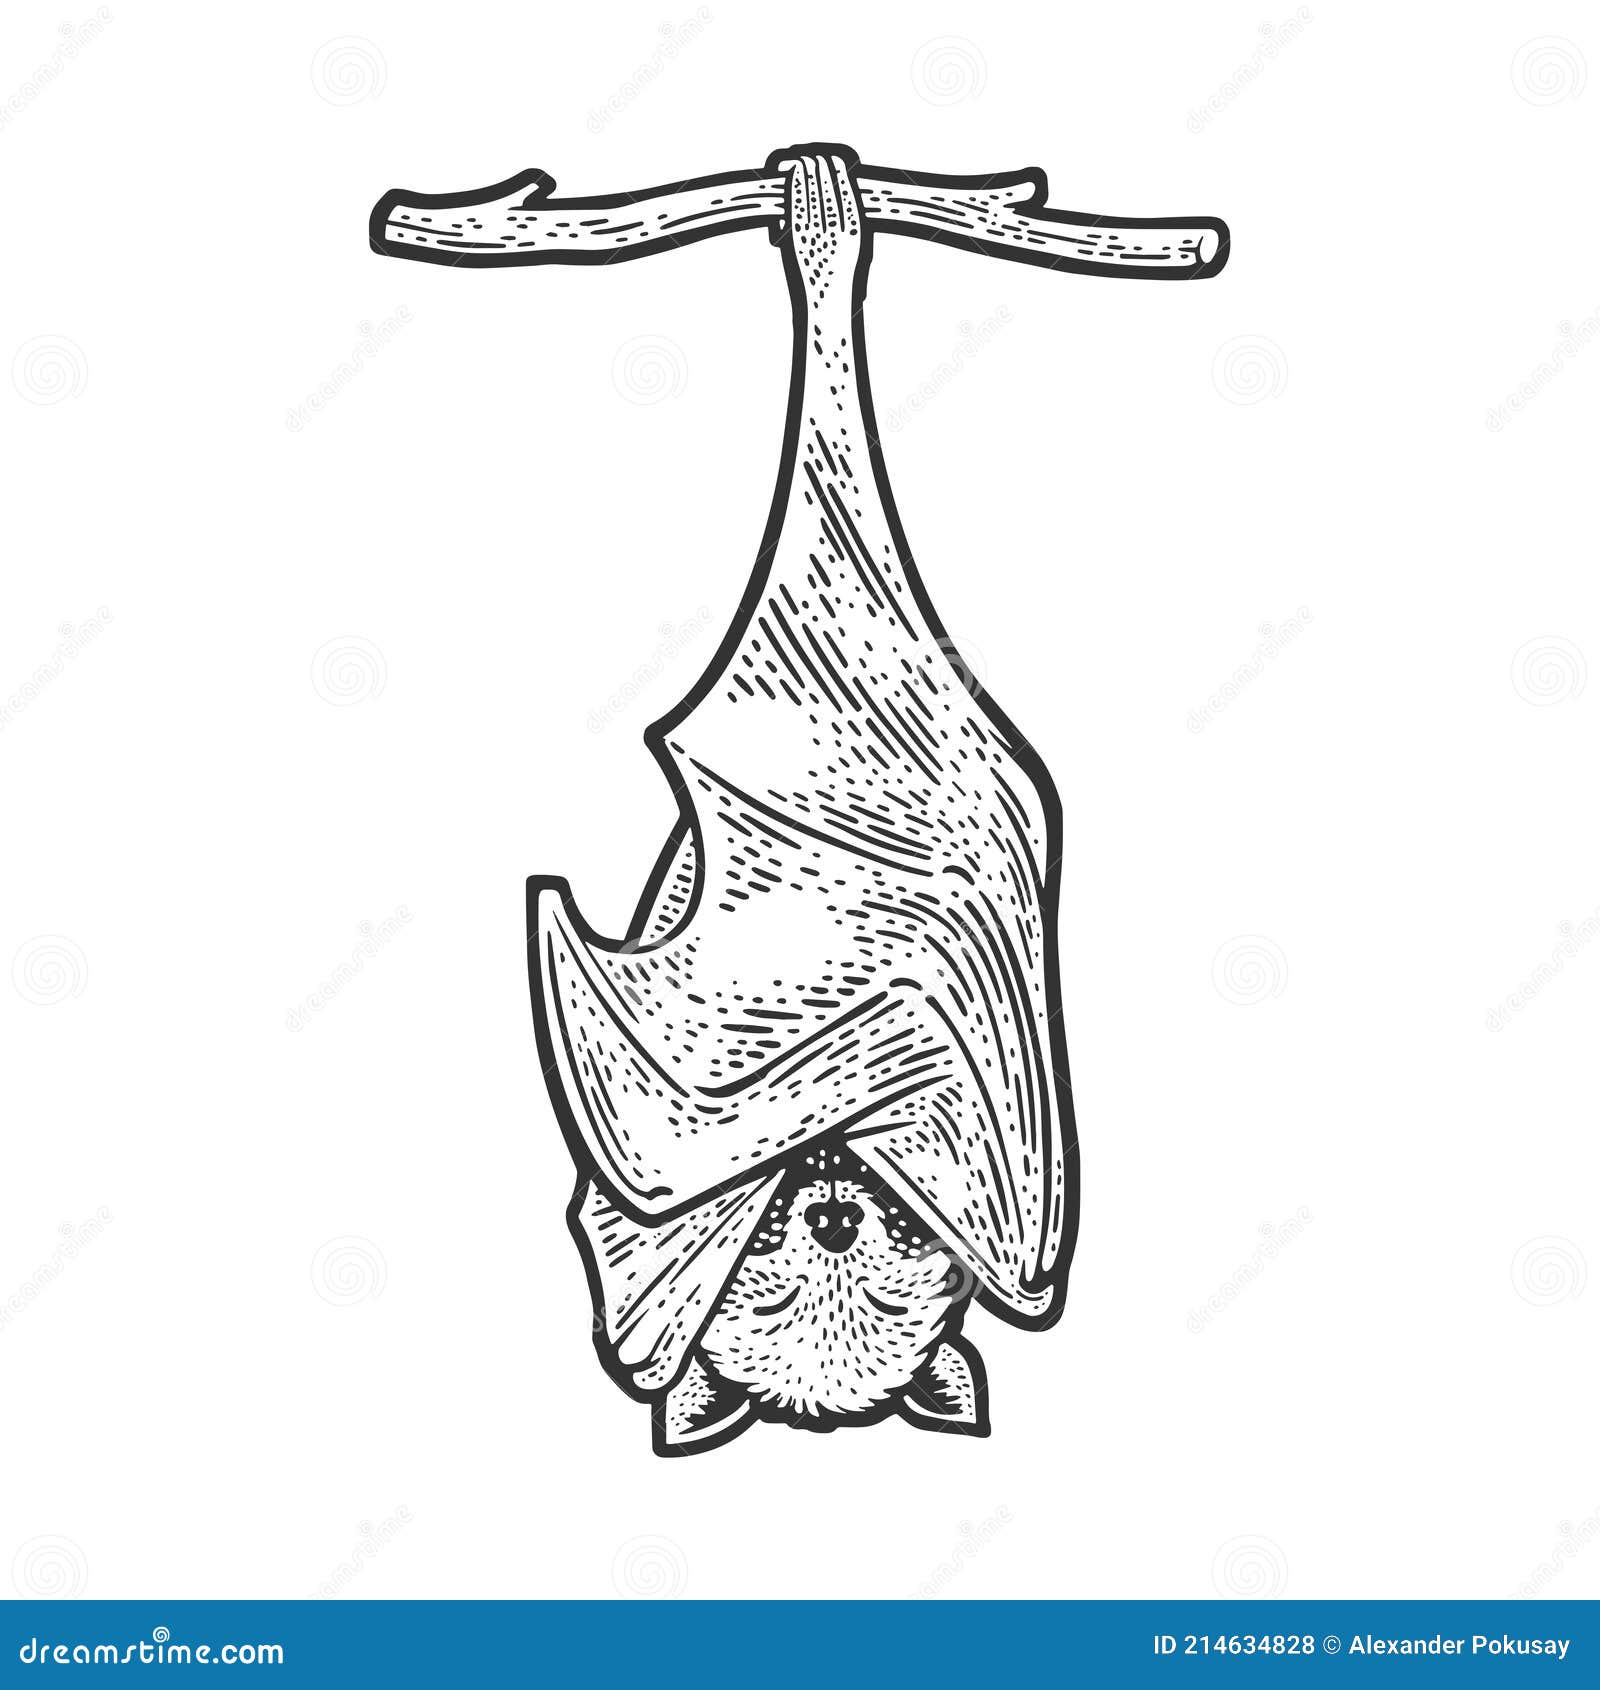 2661 Vampire Bat Tattoo Images Stock Photos  Vectors  Shutterstock